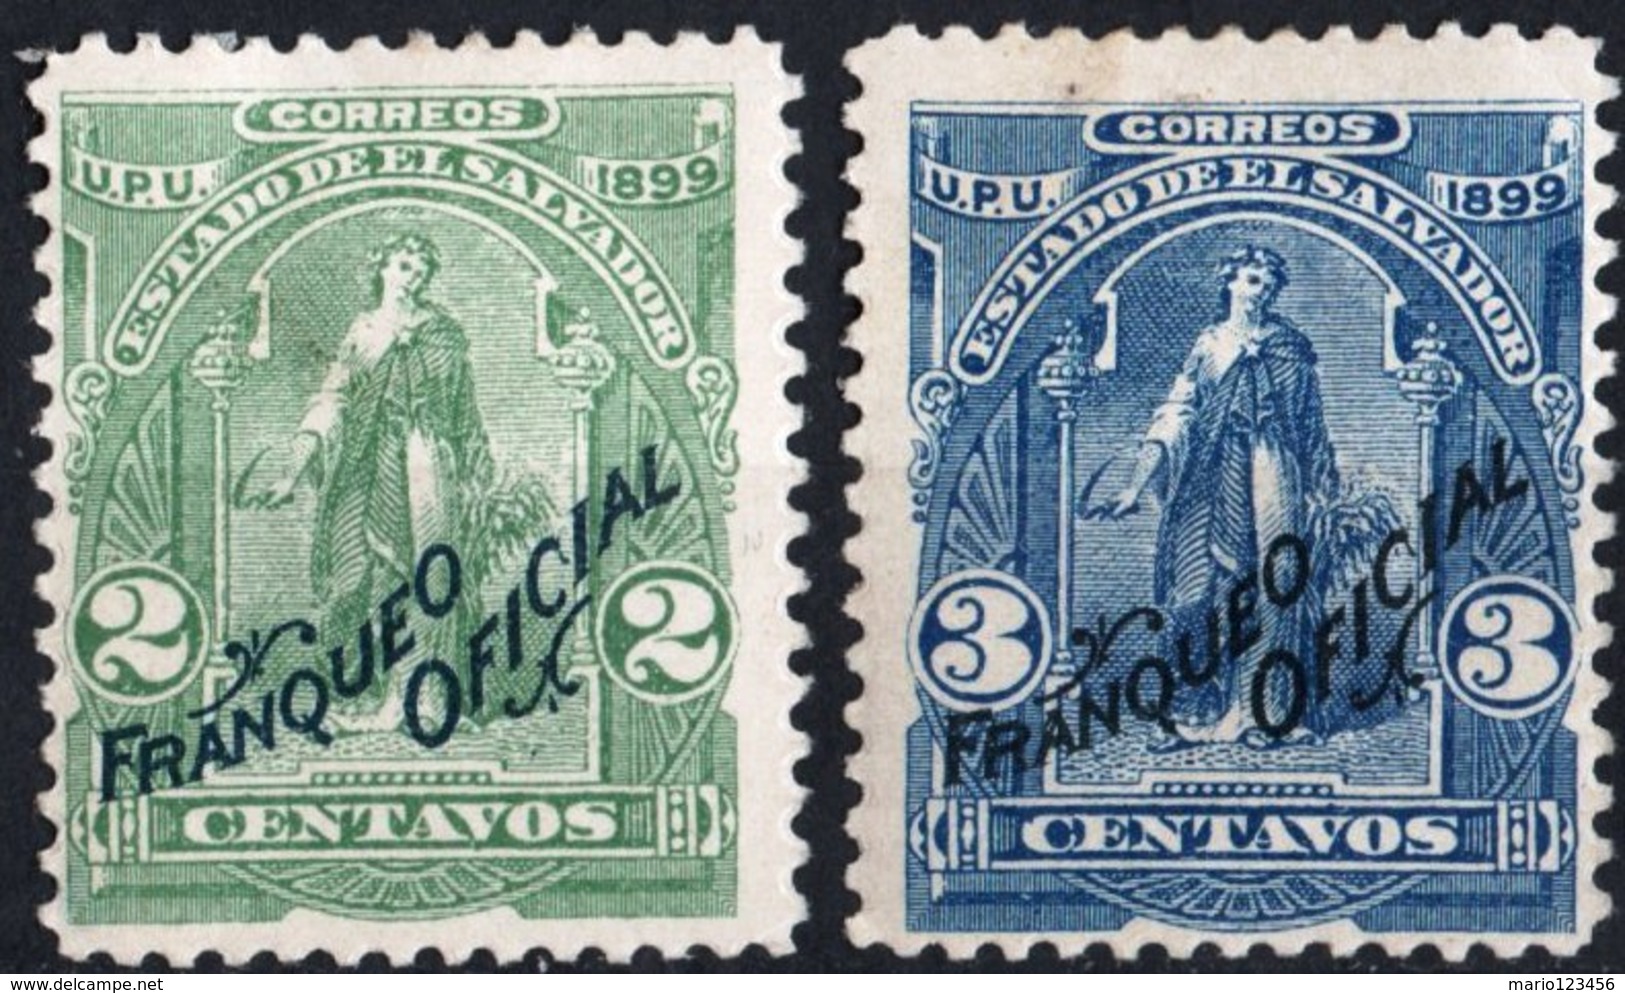 EL SALVADOR, FIGURE ALLEGORICHE, CERES, UPU, 1899, FRANCOBOLLI NUOVI (MLH*),  Scott O150,O151 - El Salvador